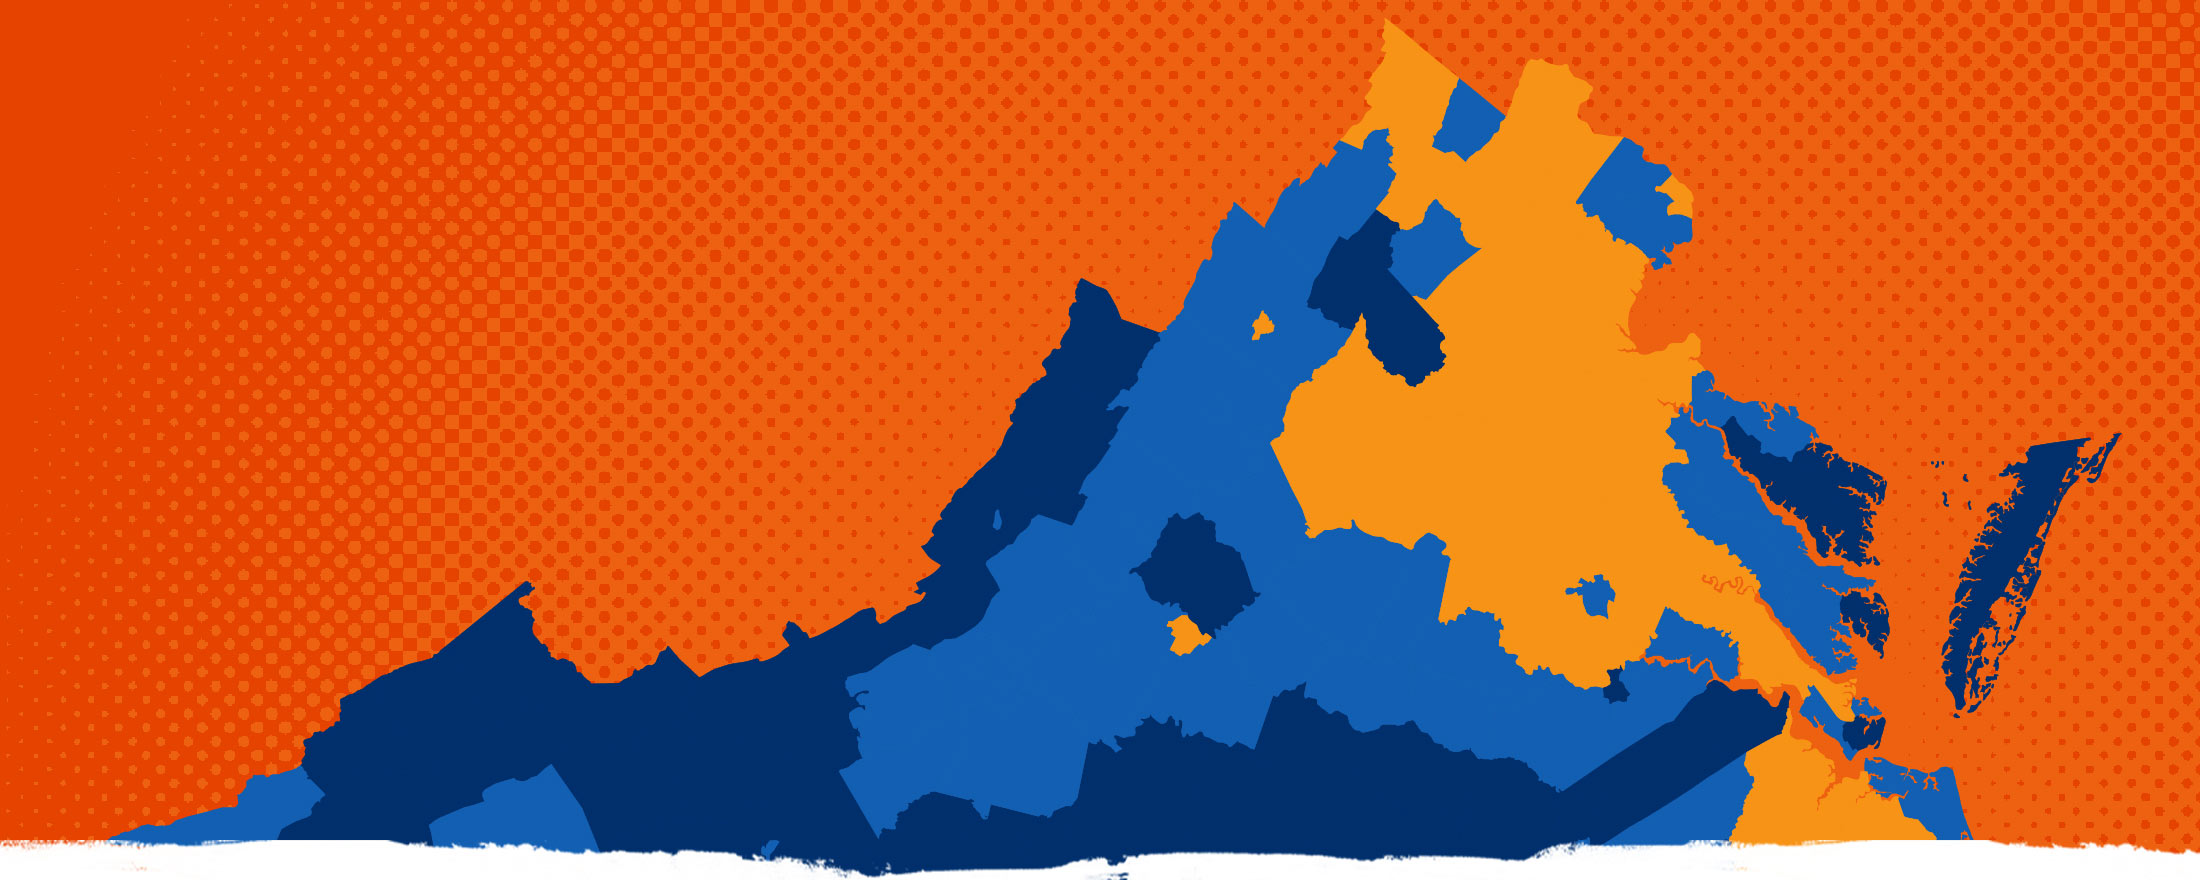 State of Virginia in Dark blue, light blue, and orange colors